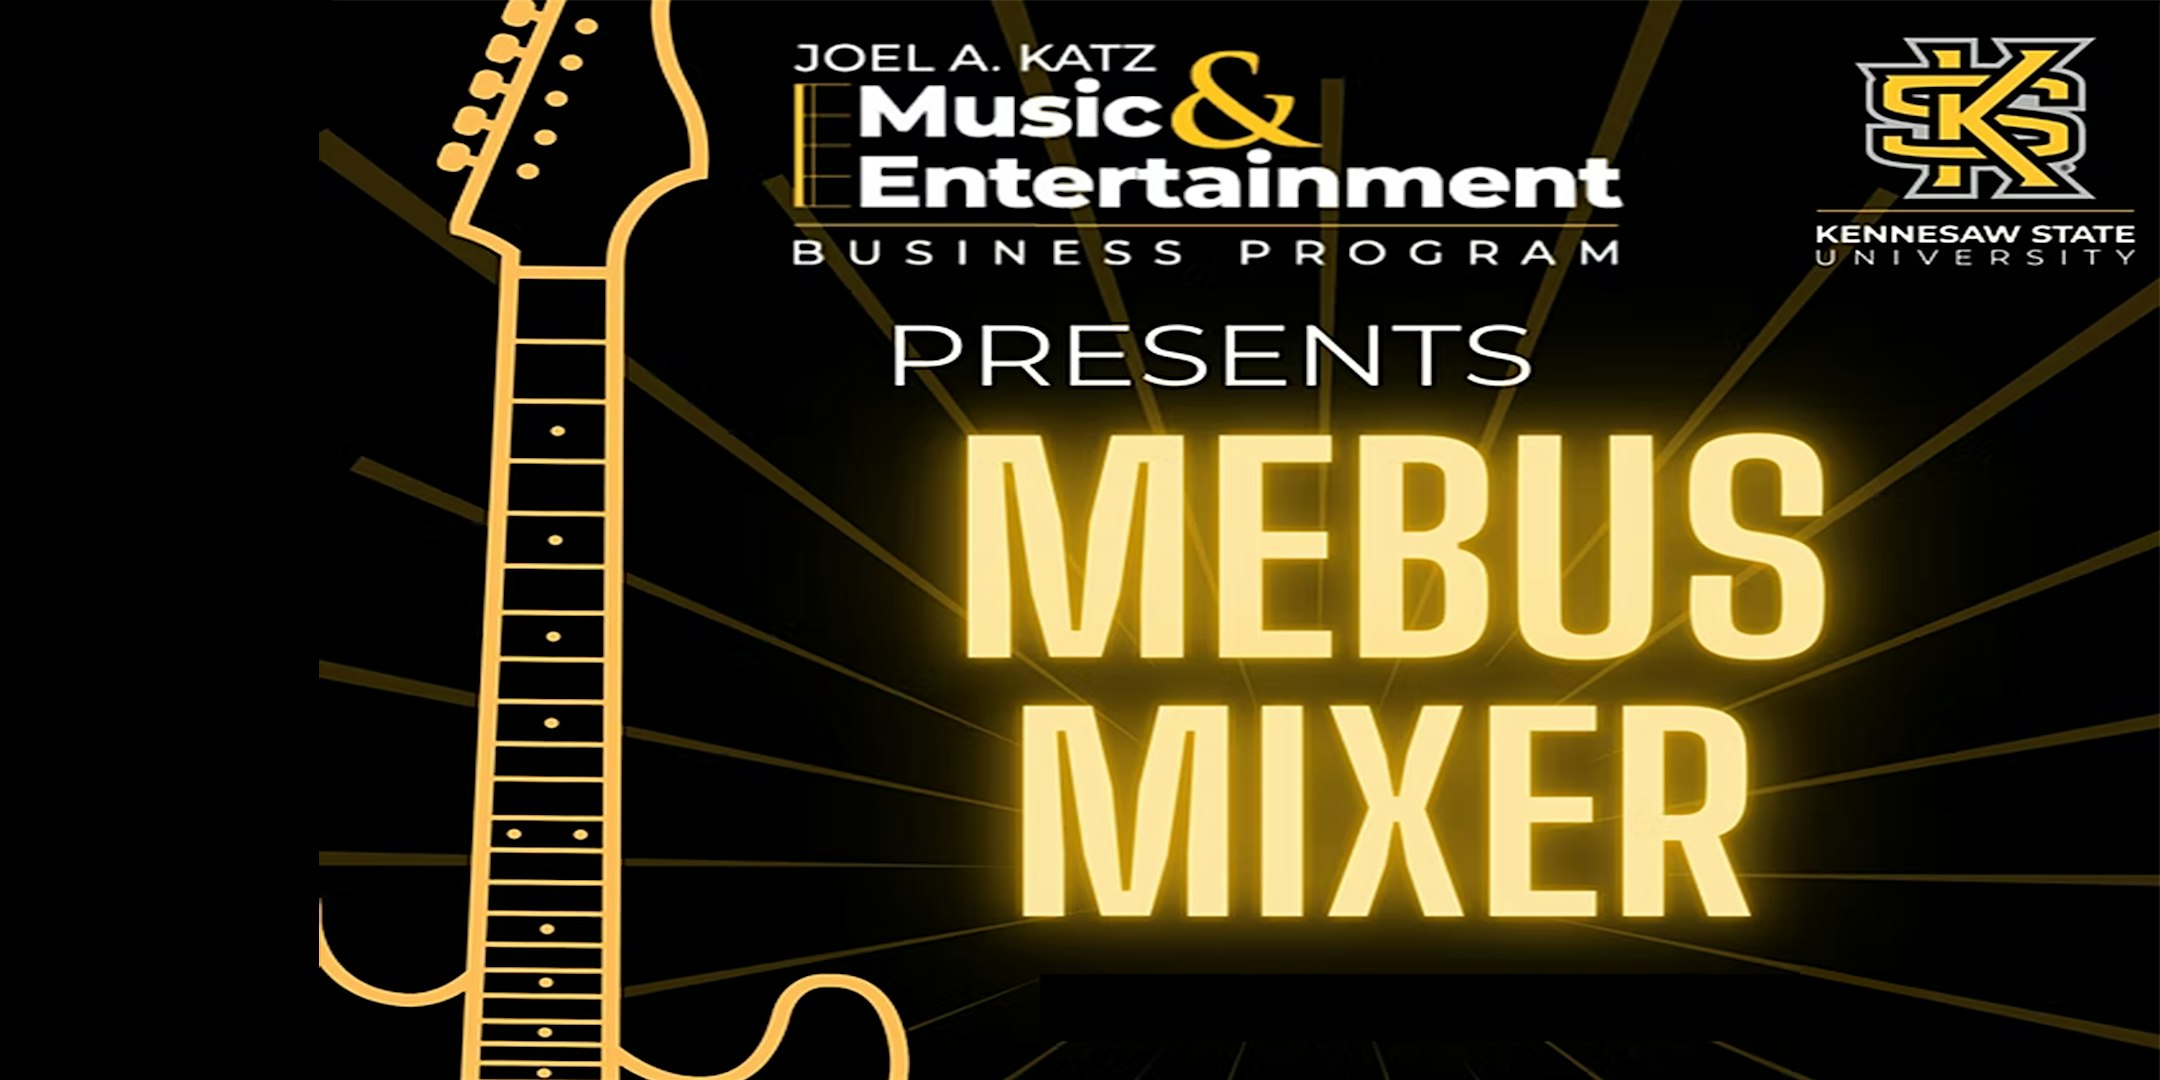 MEBUS Mixer presented by Joel A Katz Music & Entertainment Business Program